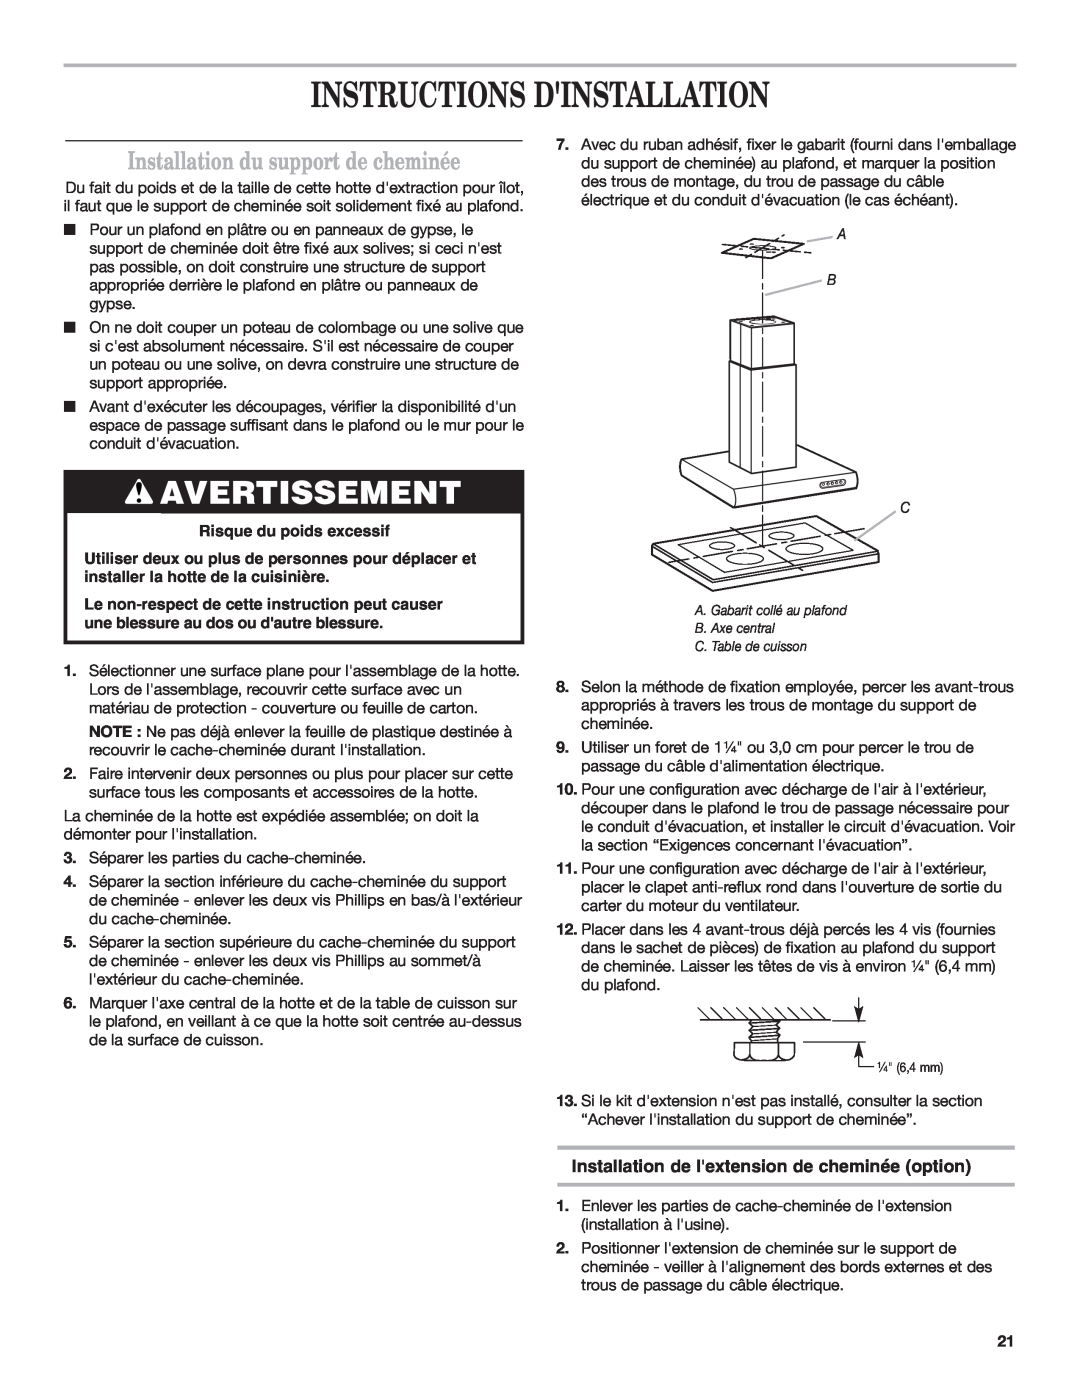 KitchenAid 9763382 Instructions Dinstallation, Installation du support de cheminée, Risque du poids excessif 